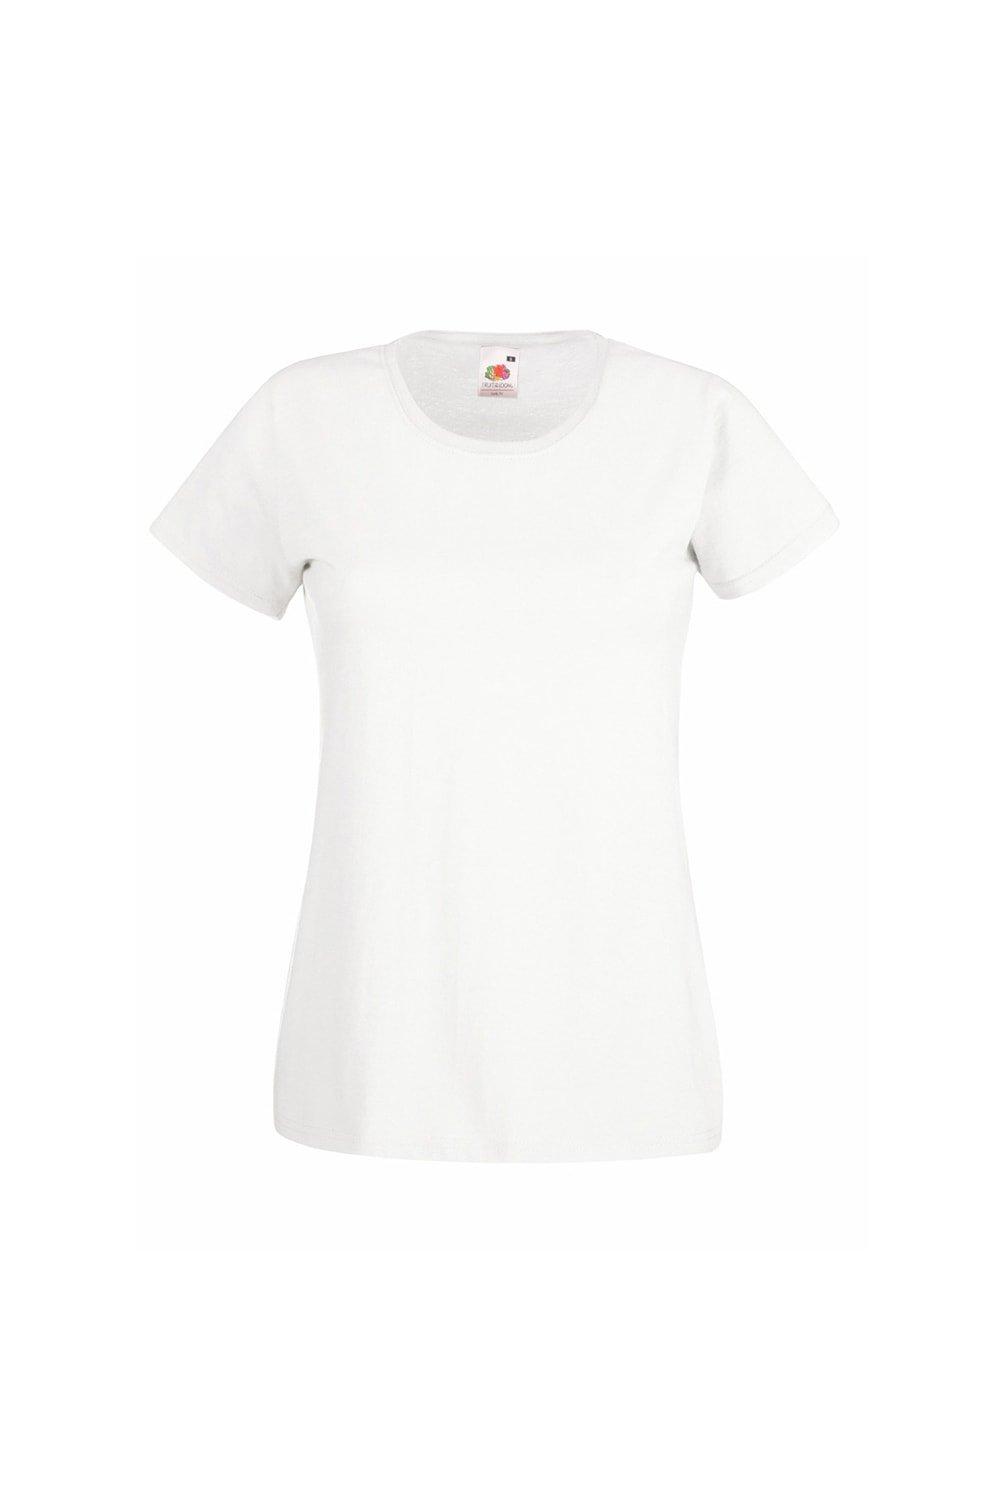 Повседневная футболка с короткими рукавами Value Universal Textiles, белый мужская футболка игуана с коктейлем s серый меланж